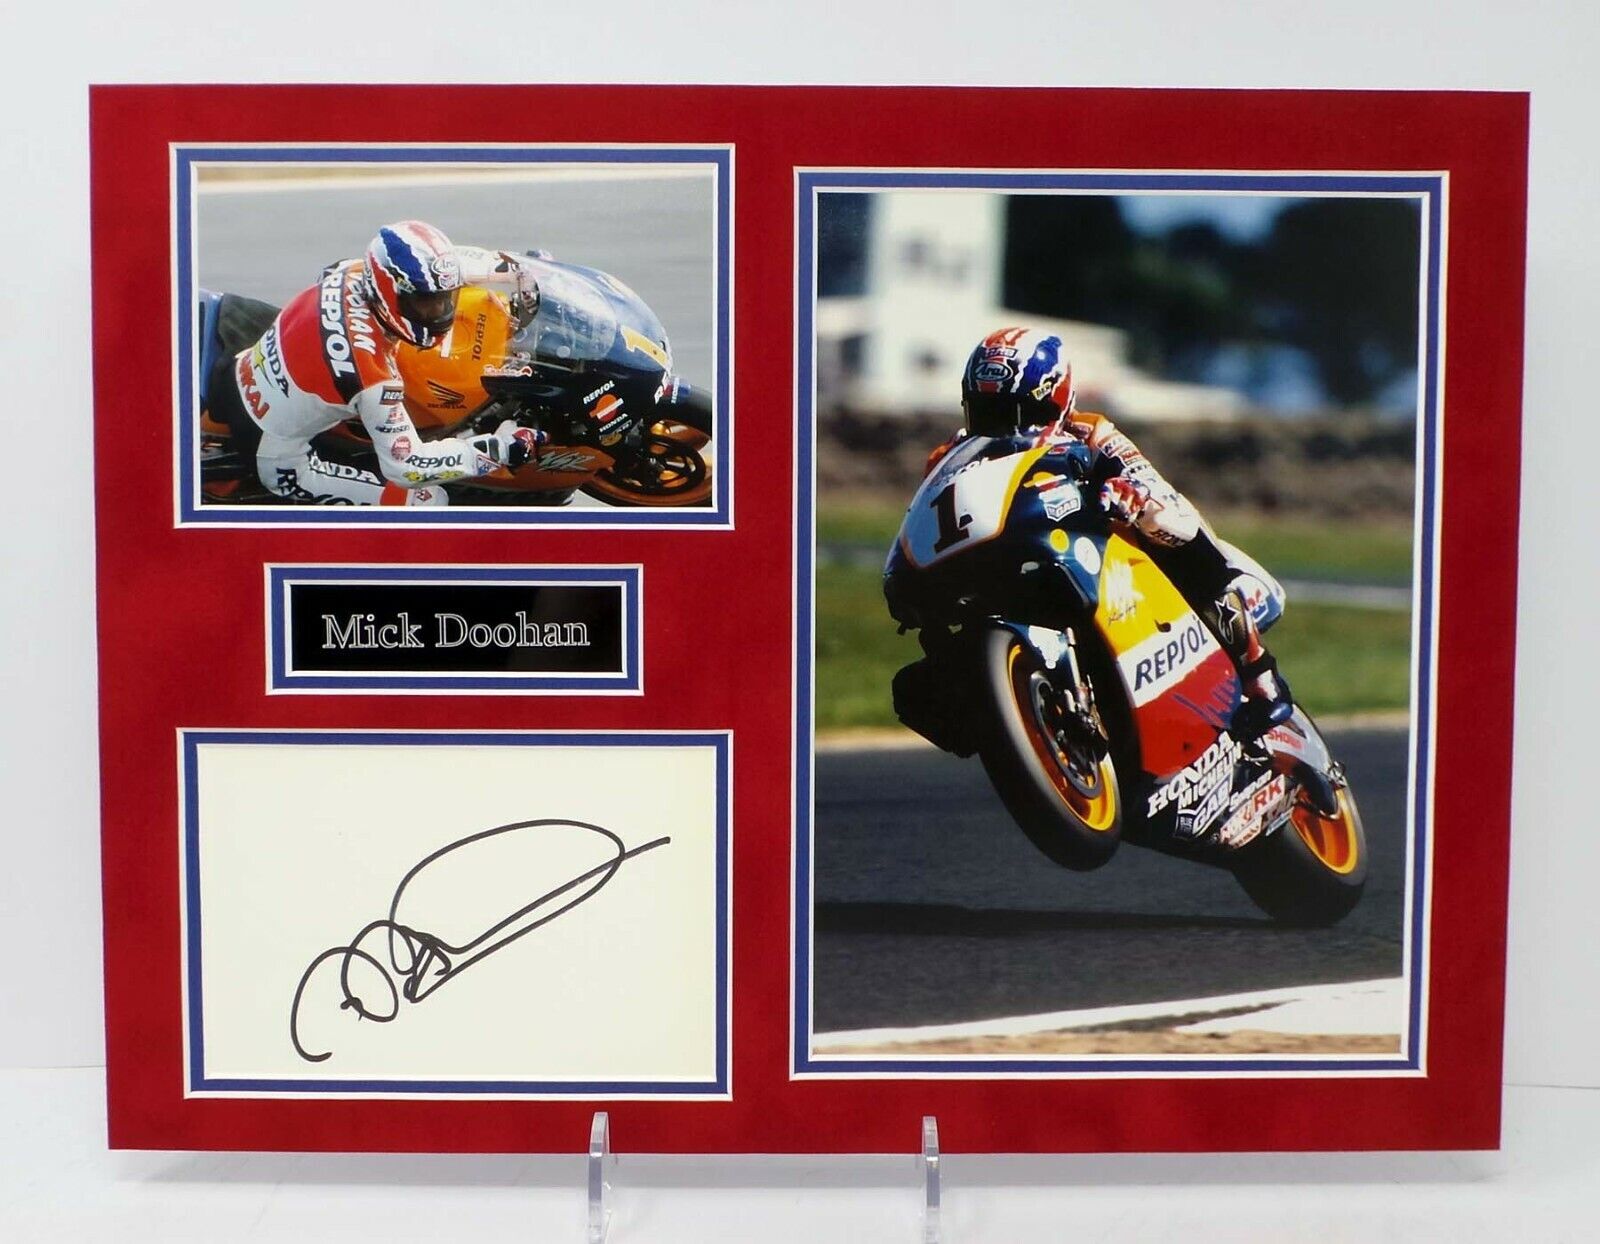 Mick DOOHAN Signed Mounted 16x12 Photo Poster painting Display AFTAL RD COA Team Honda Champion